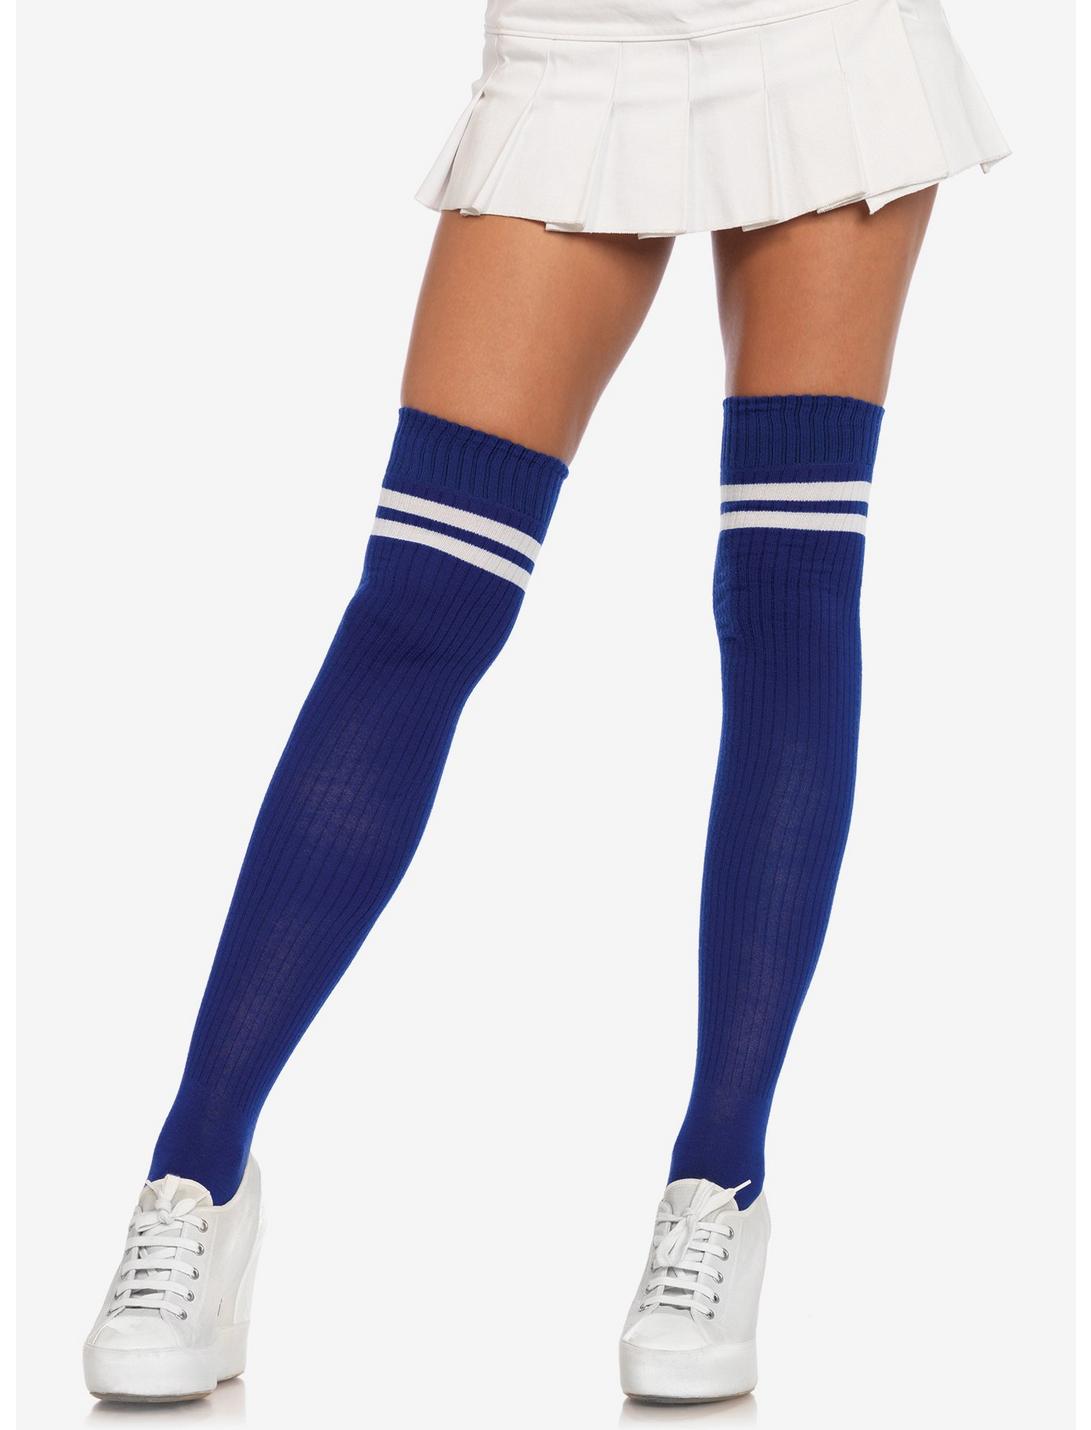 Blue & White Stripe Ribbed Athletic Thigh High Socks, , hi-res